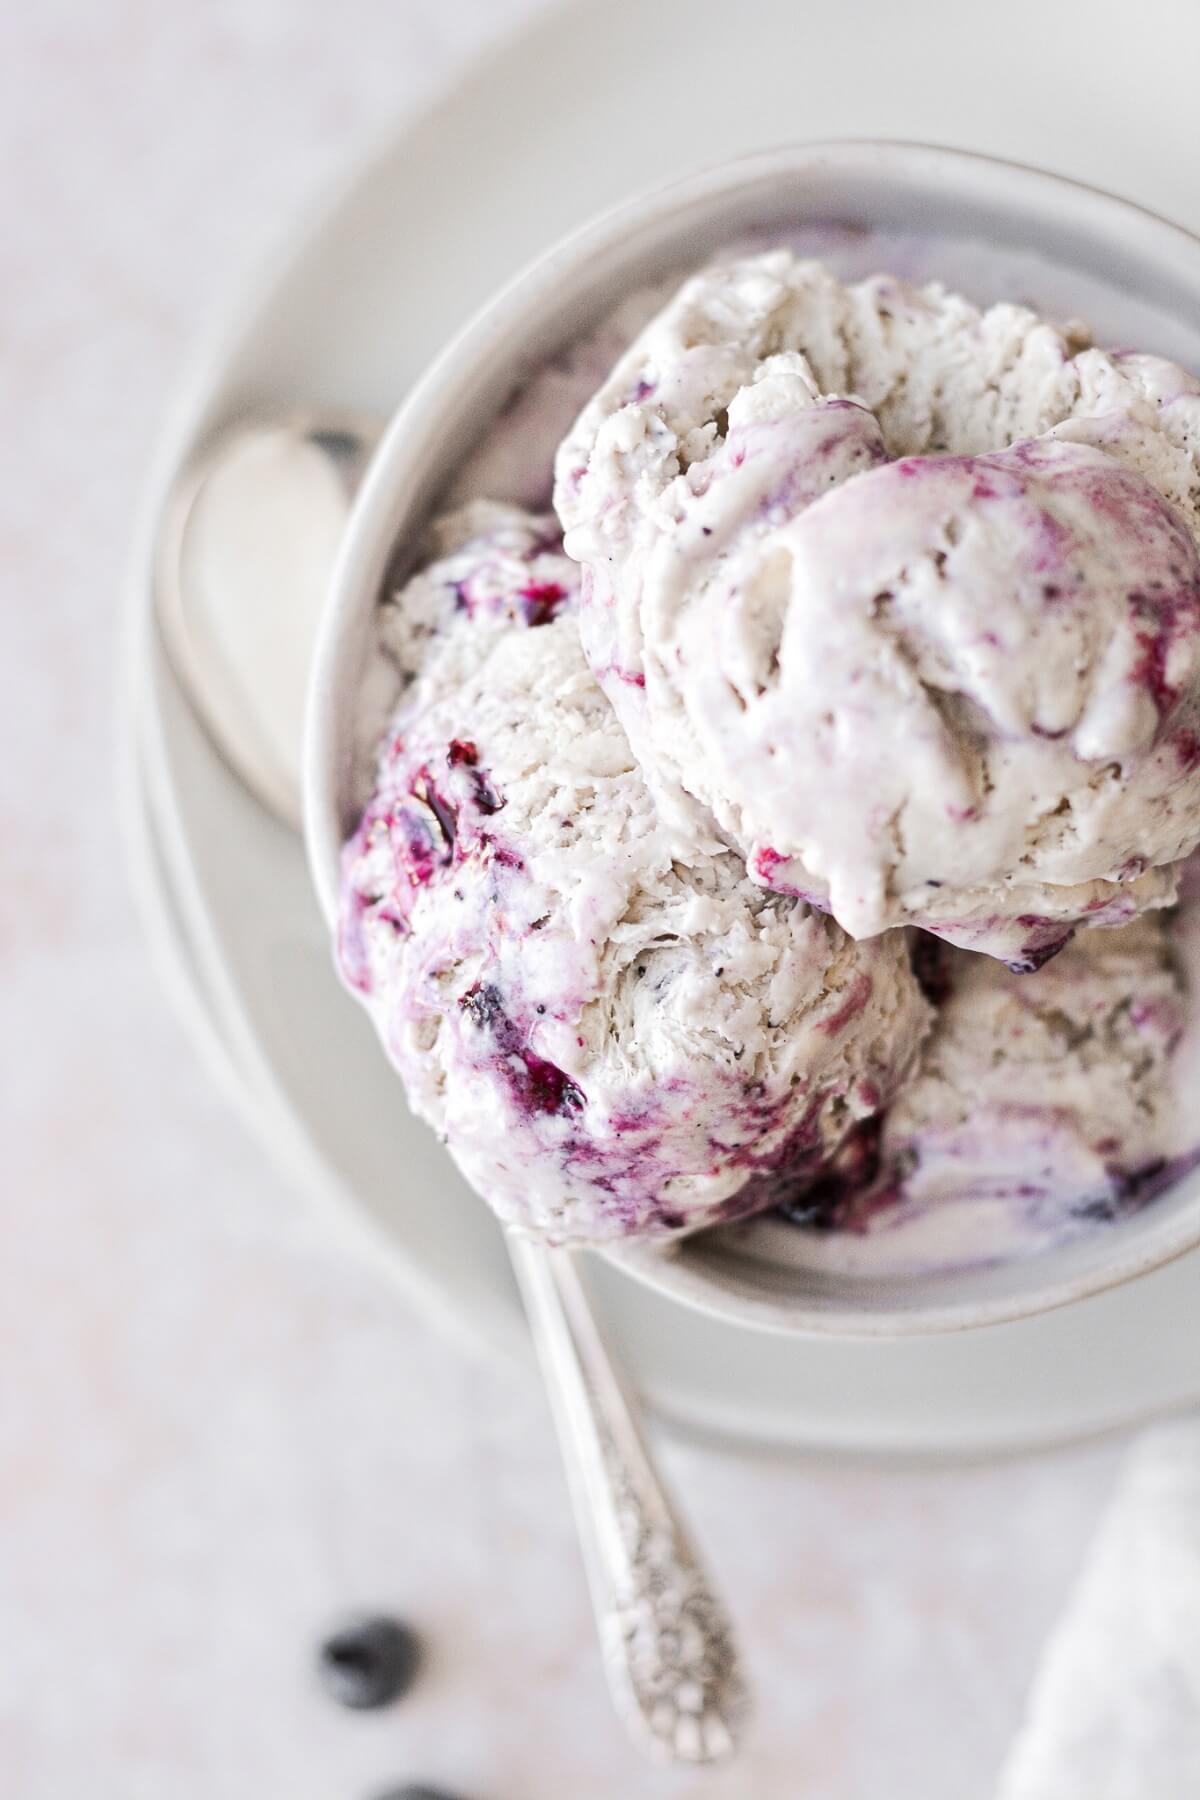 Bowl of no churn blueberry swirl ice cream.